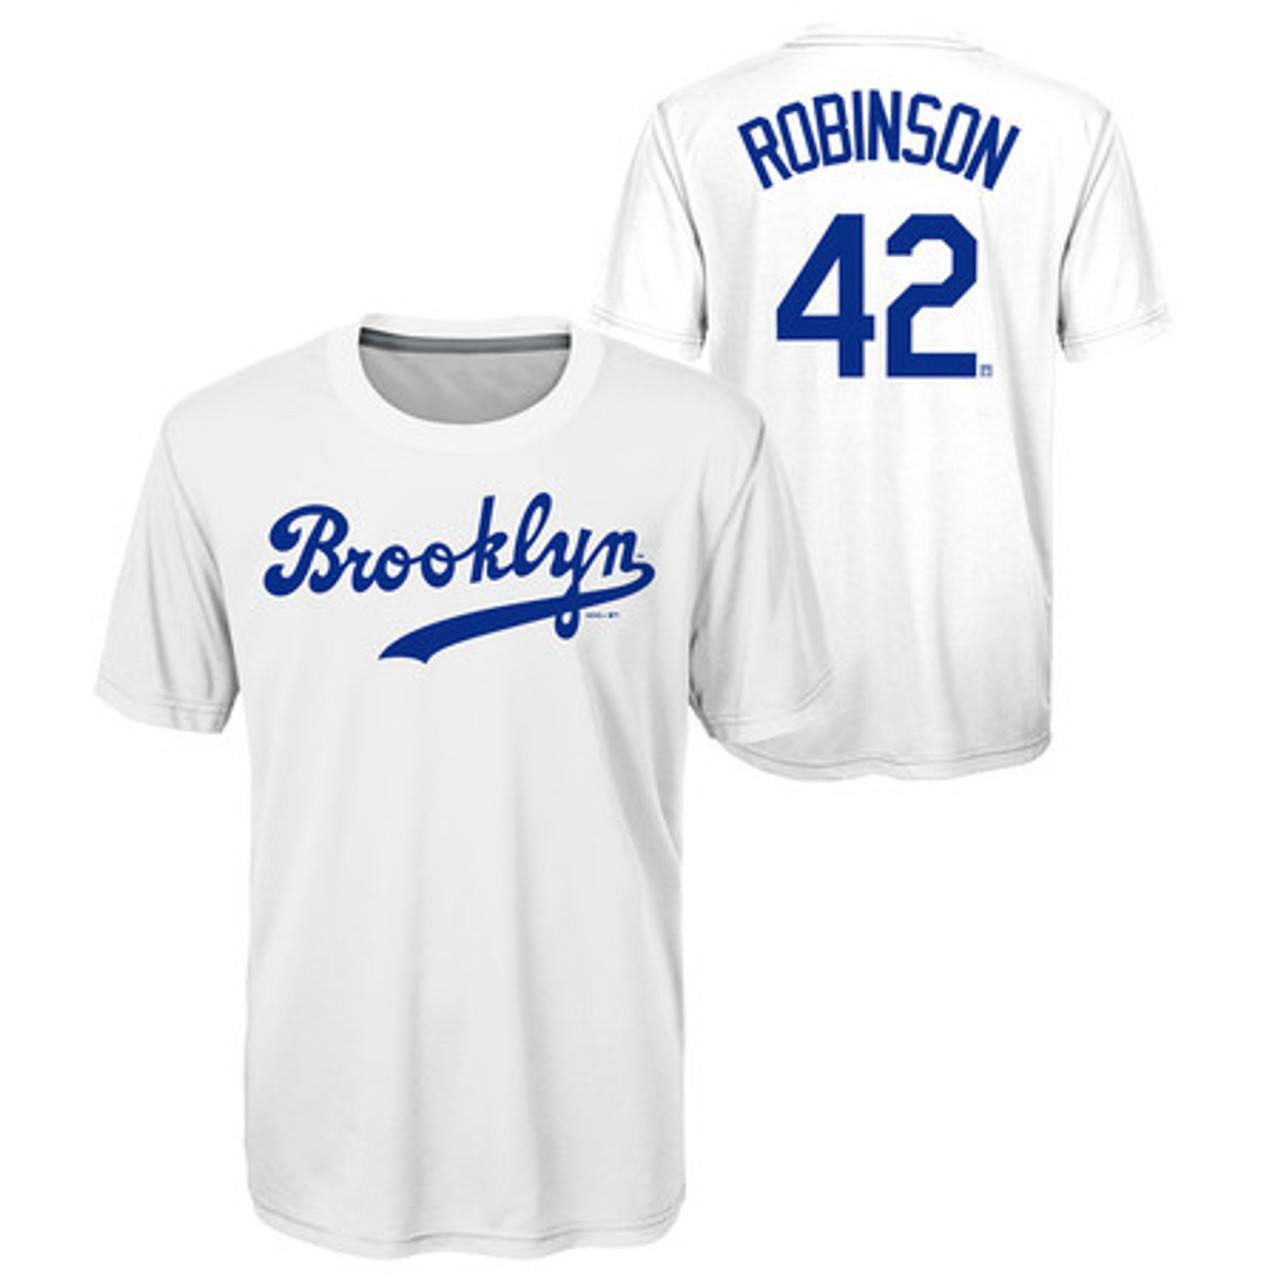 brooklyn dodgers 42 shirt